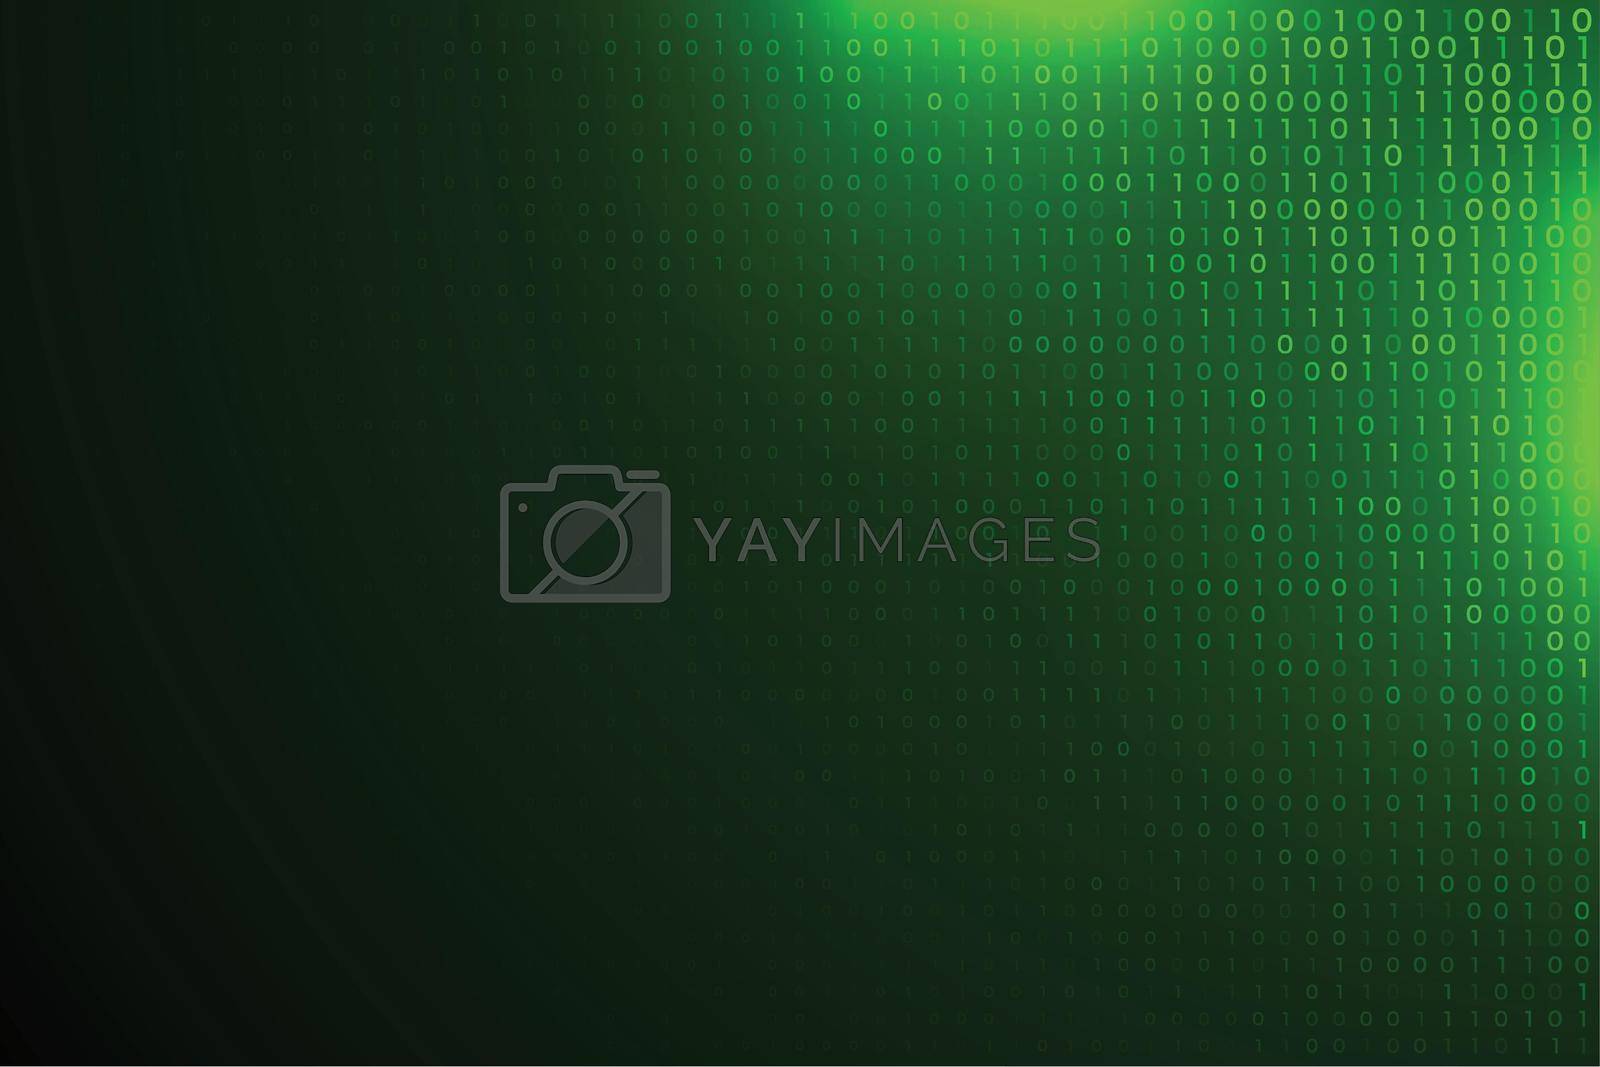 Royalty free image of green digital binary numbers glowing background by mstjahanara